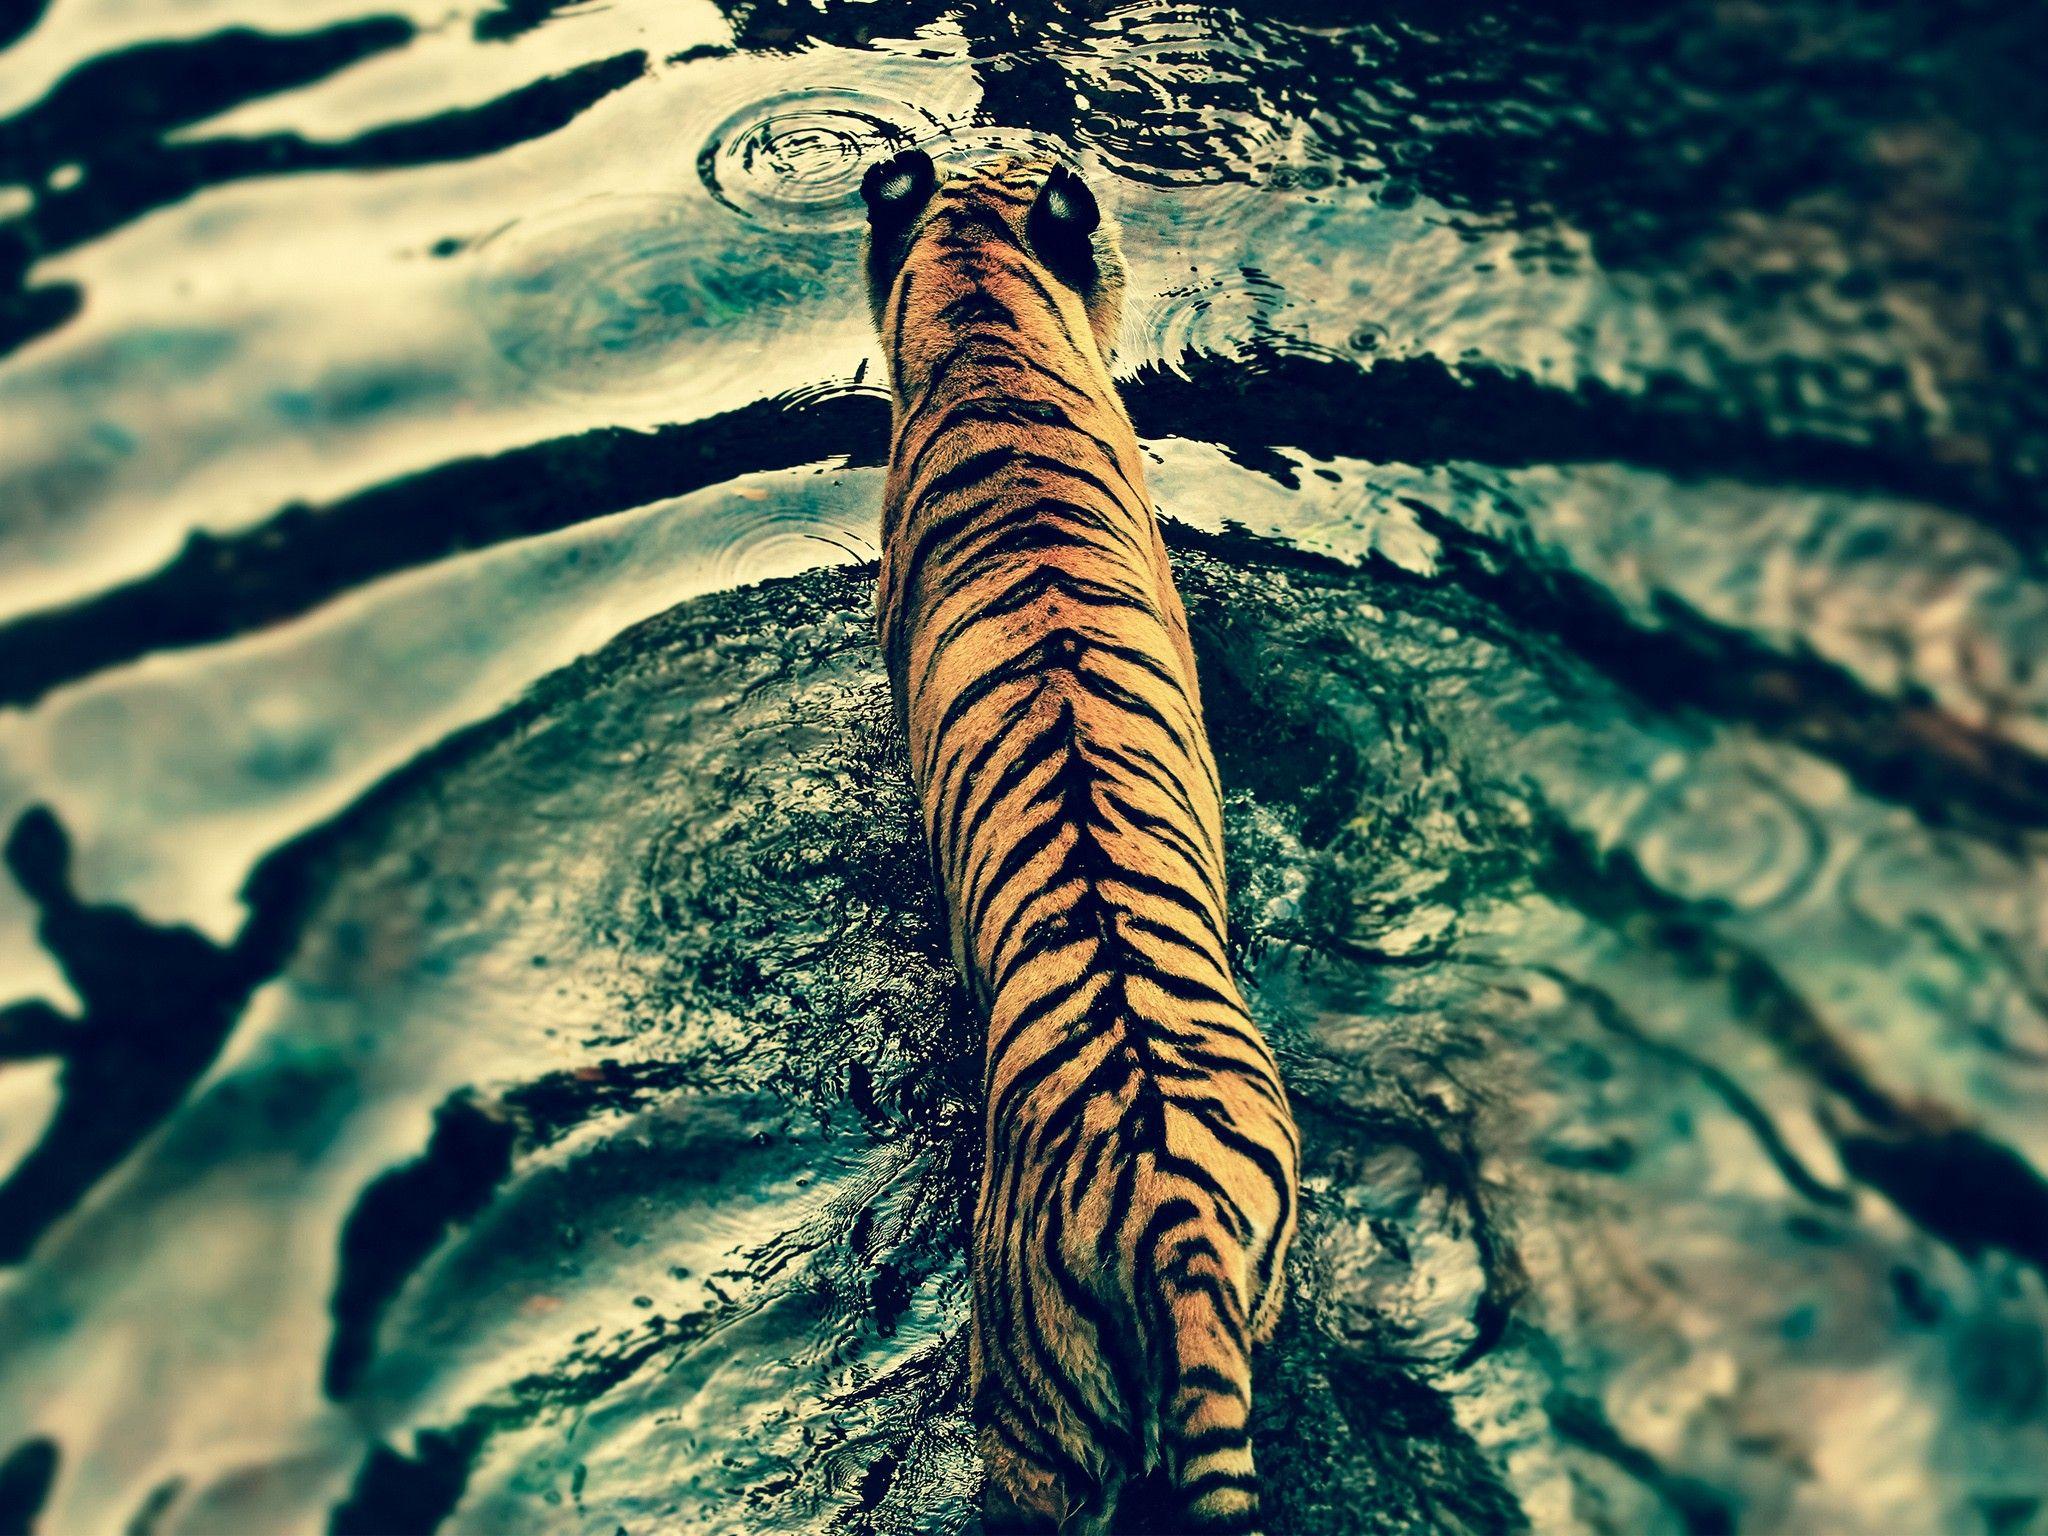 Tiger in Disney's Animal Kingdom HD Wallpaper Free Download at